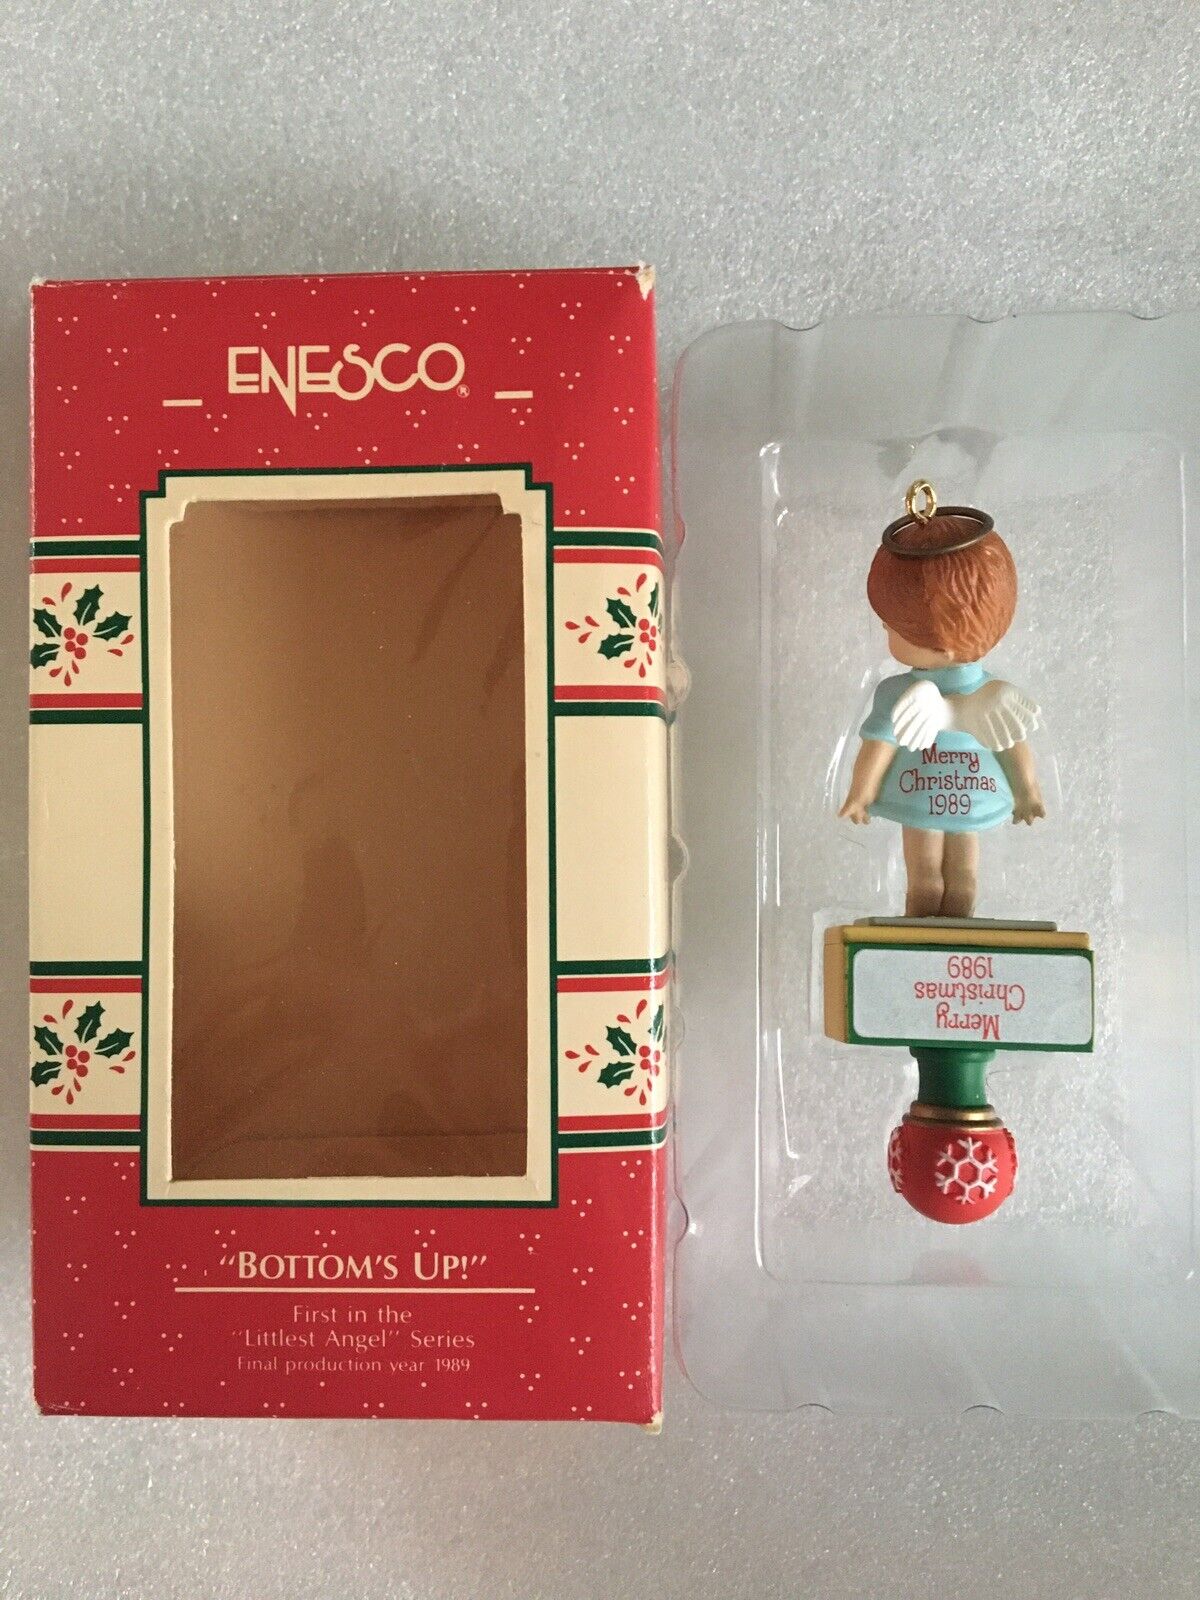 1989 Enesco Treasury Christmas Ornament #830003 Bottom’s Up - Littlest Angel #1